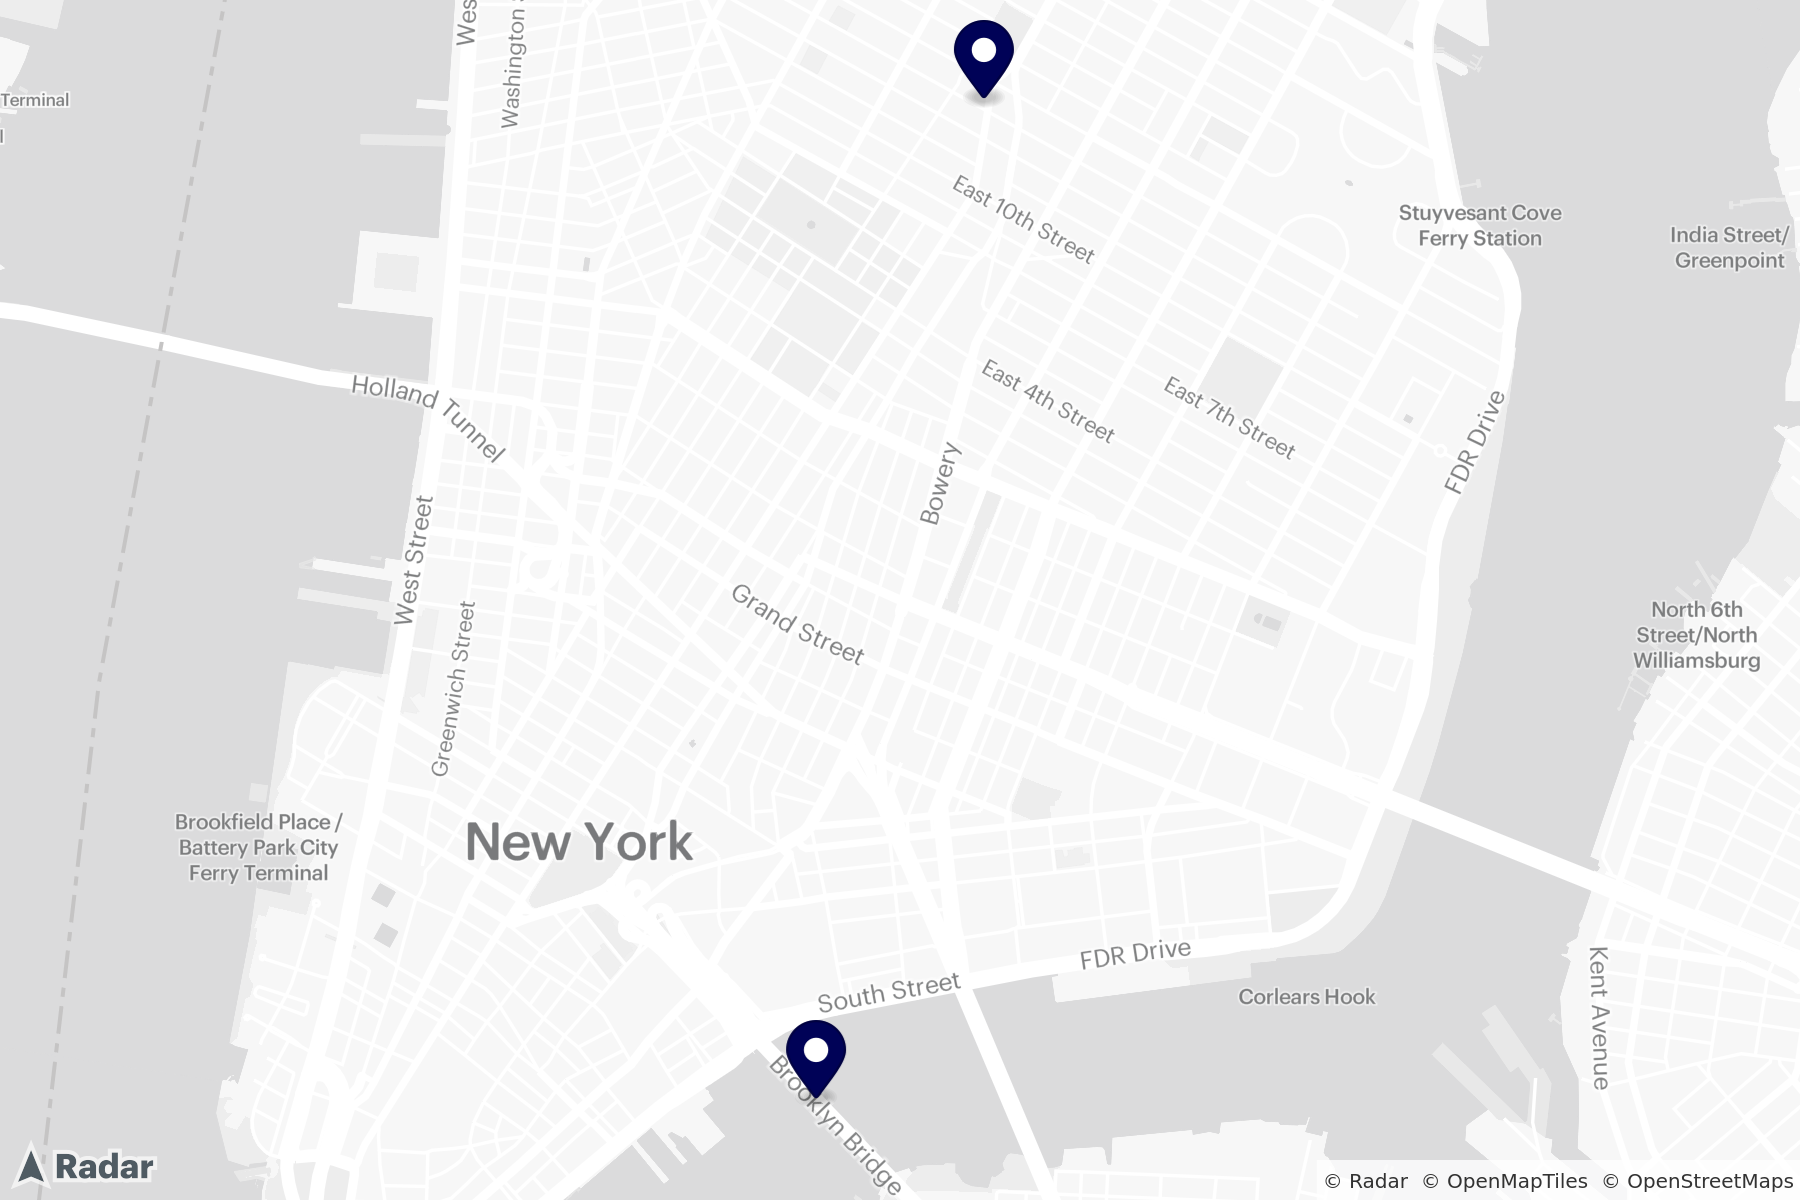 Radar Static Map over New York City